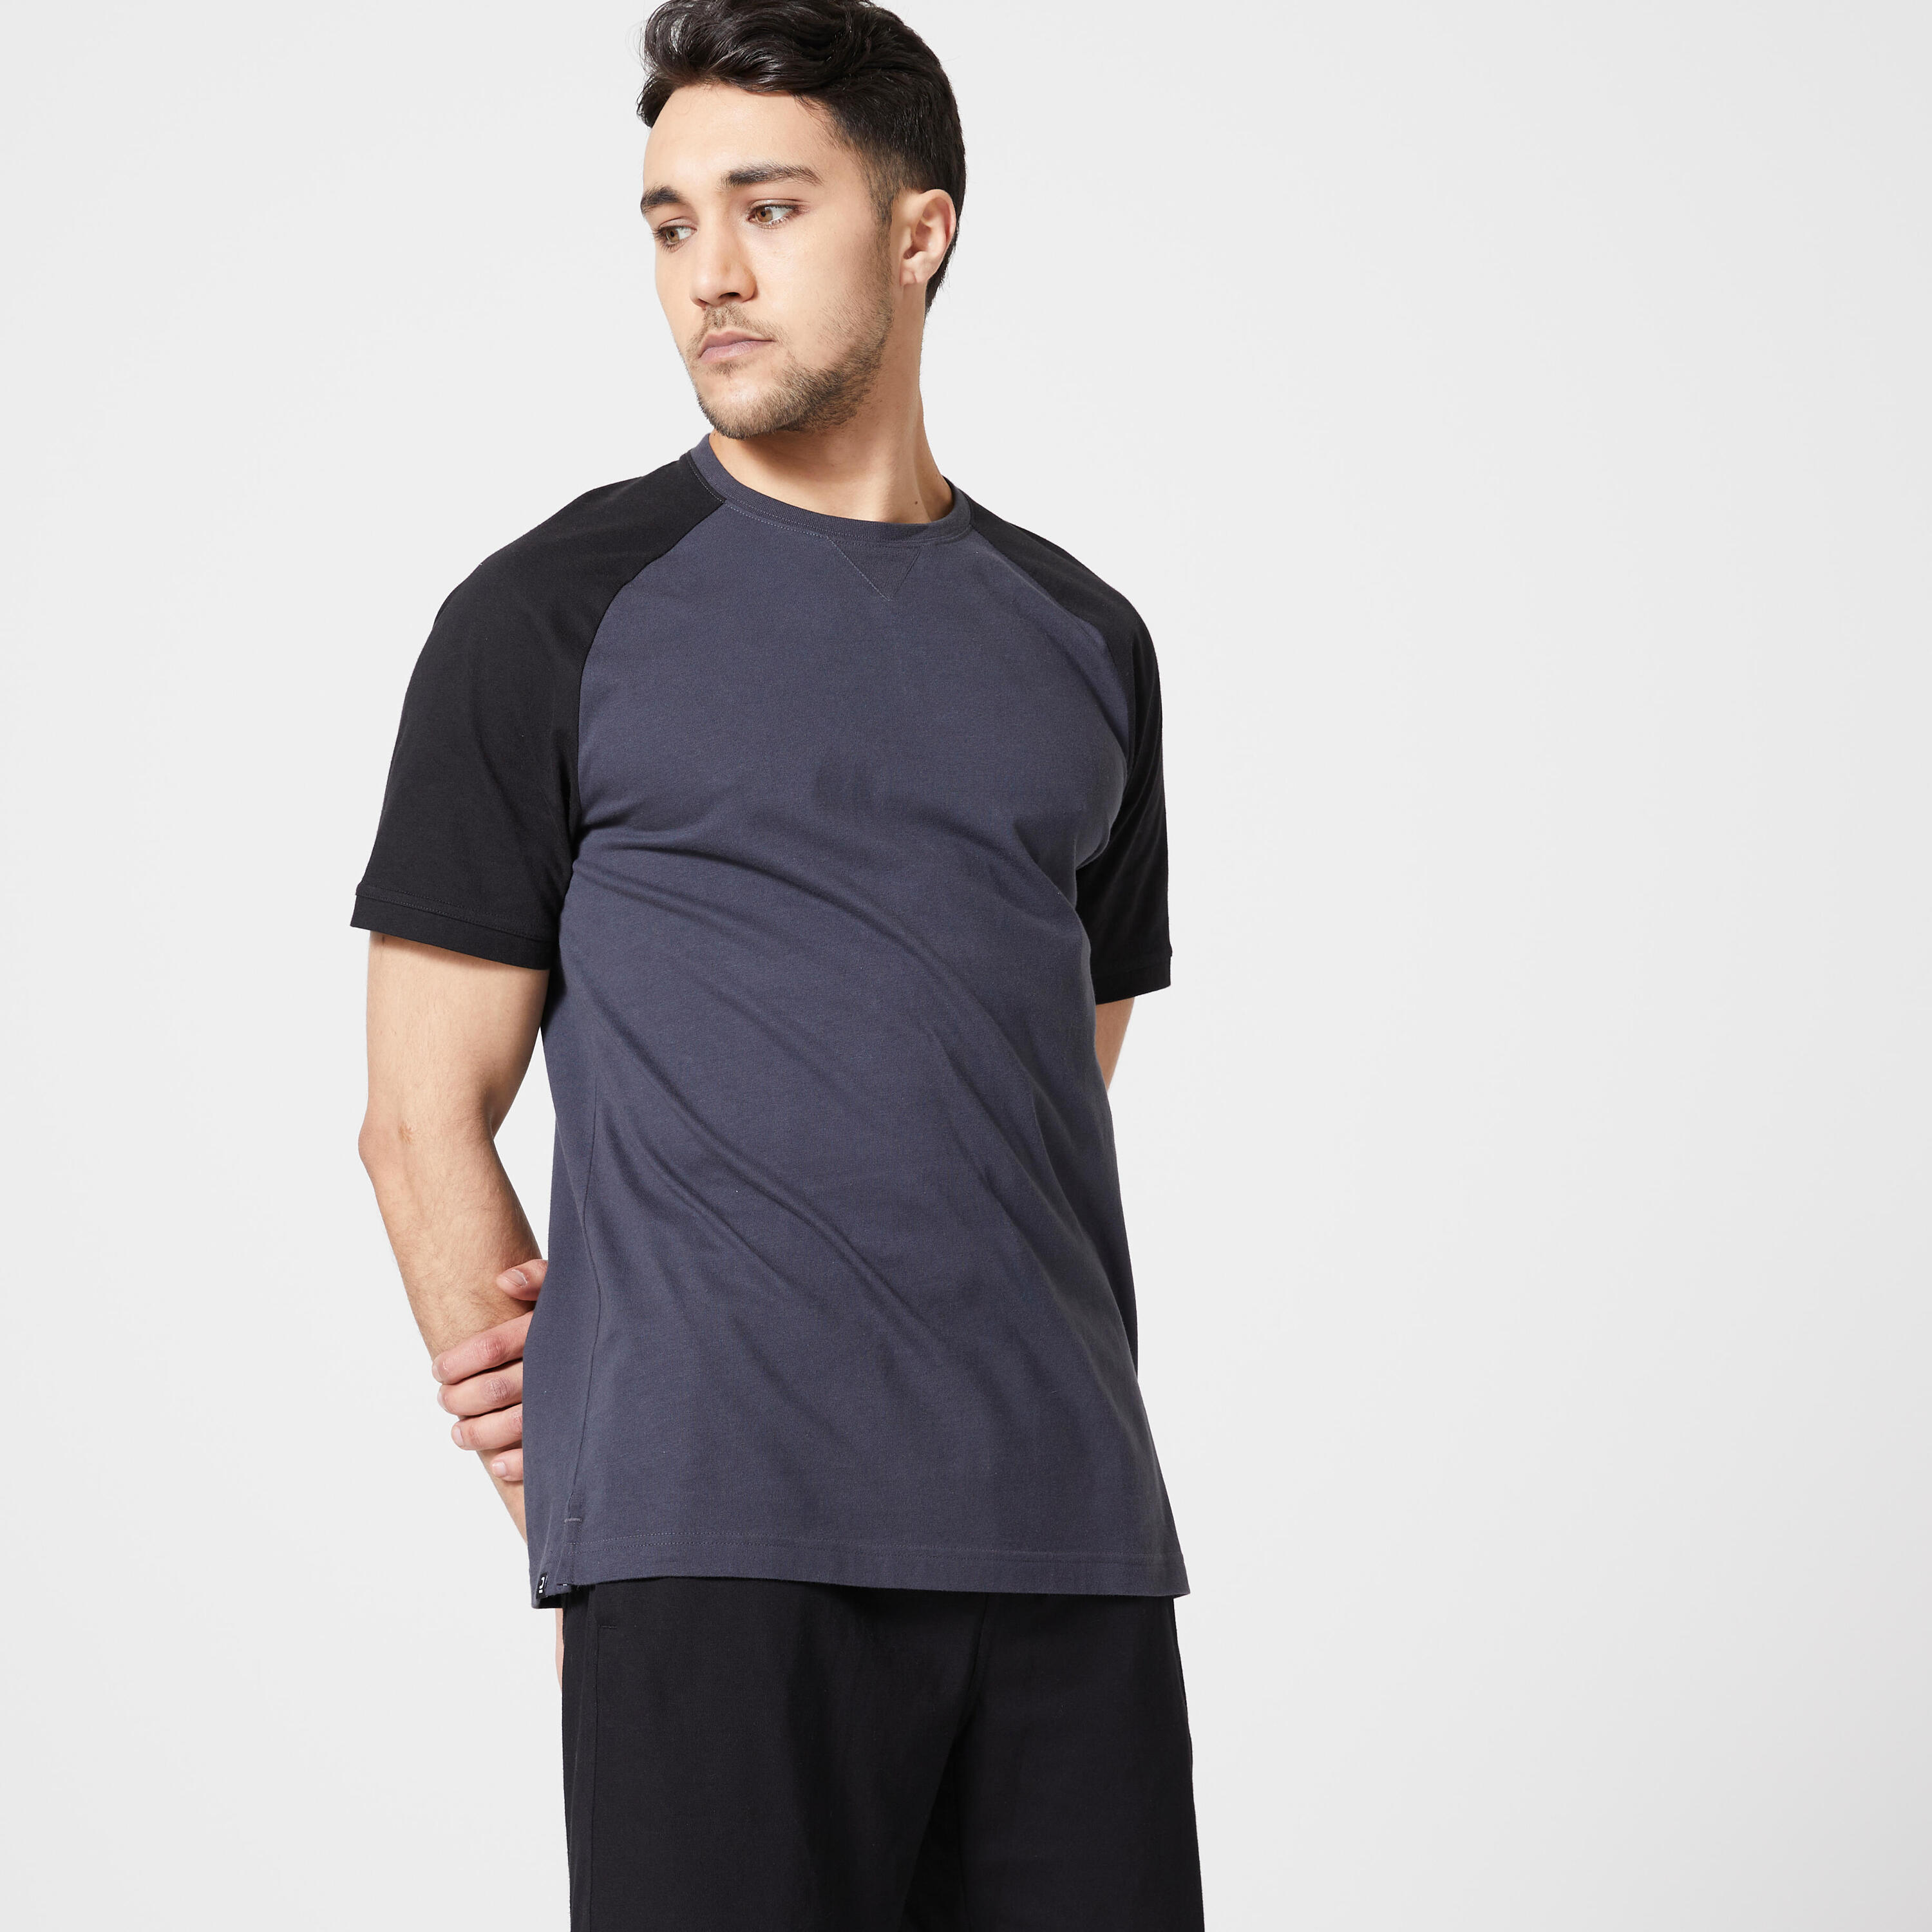 Men's Fitness T-Shirt 520 - Grey/Black 1/5